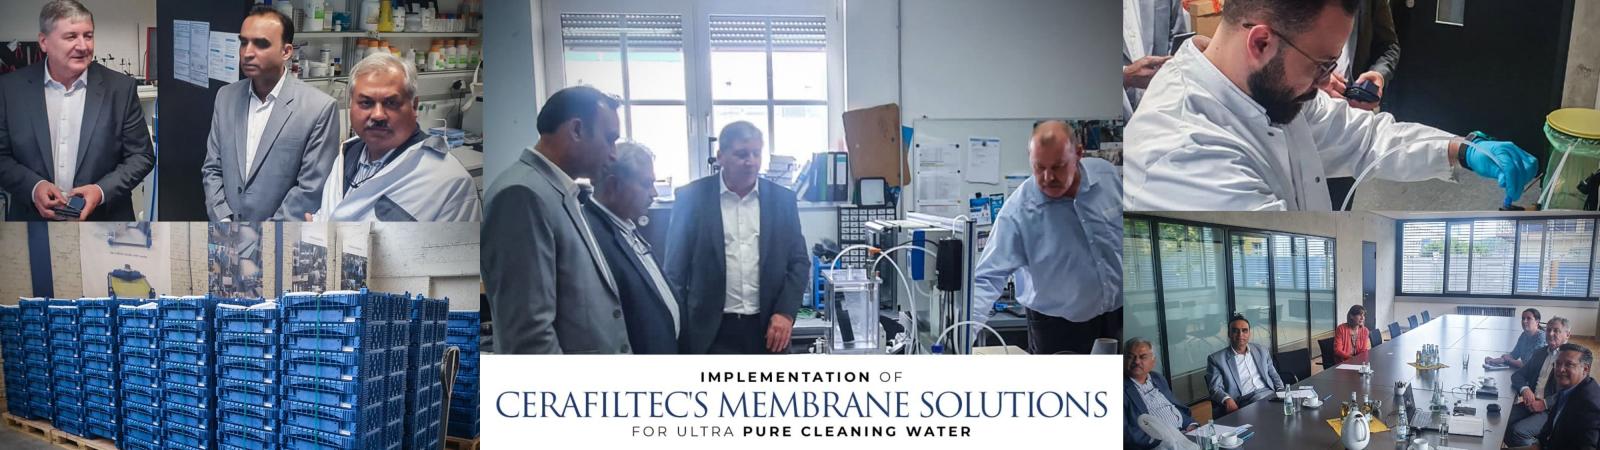 Implementation of Cerafiltec's Membrane Solutions